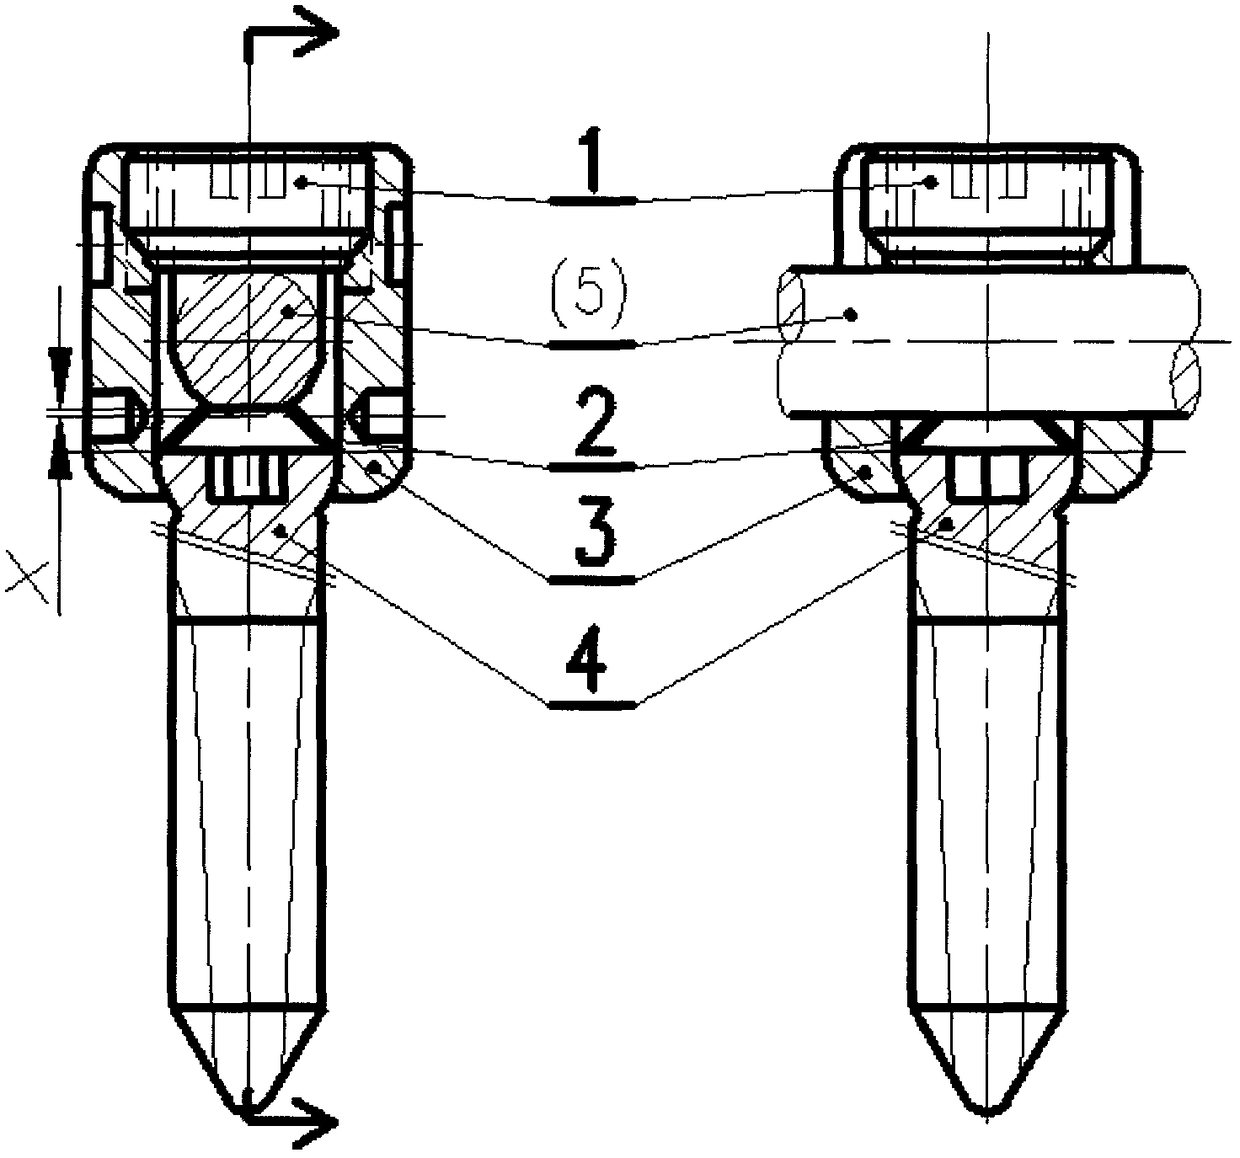 Low-cut simple micro-dynamic pedicle screw